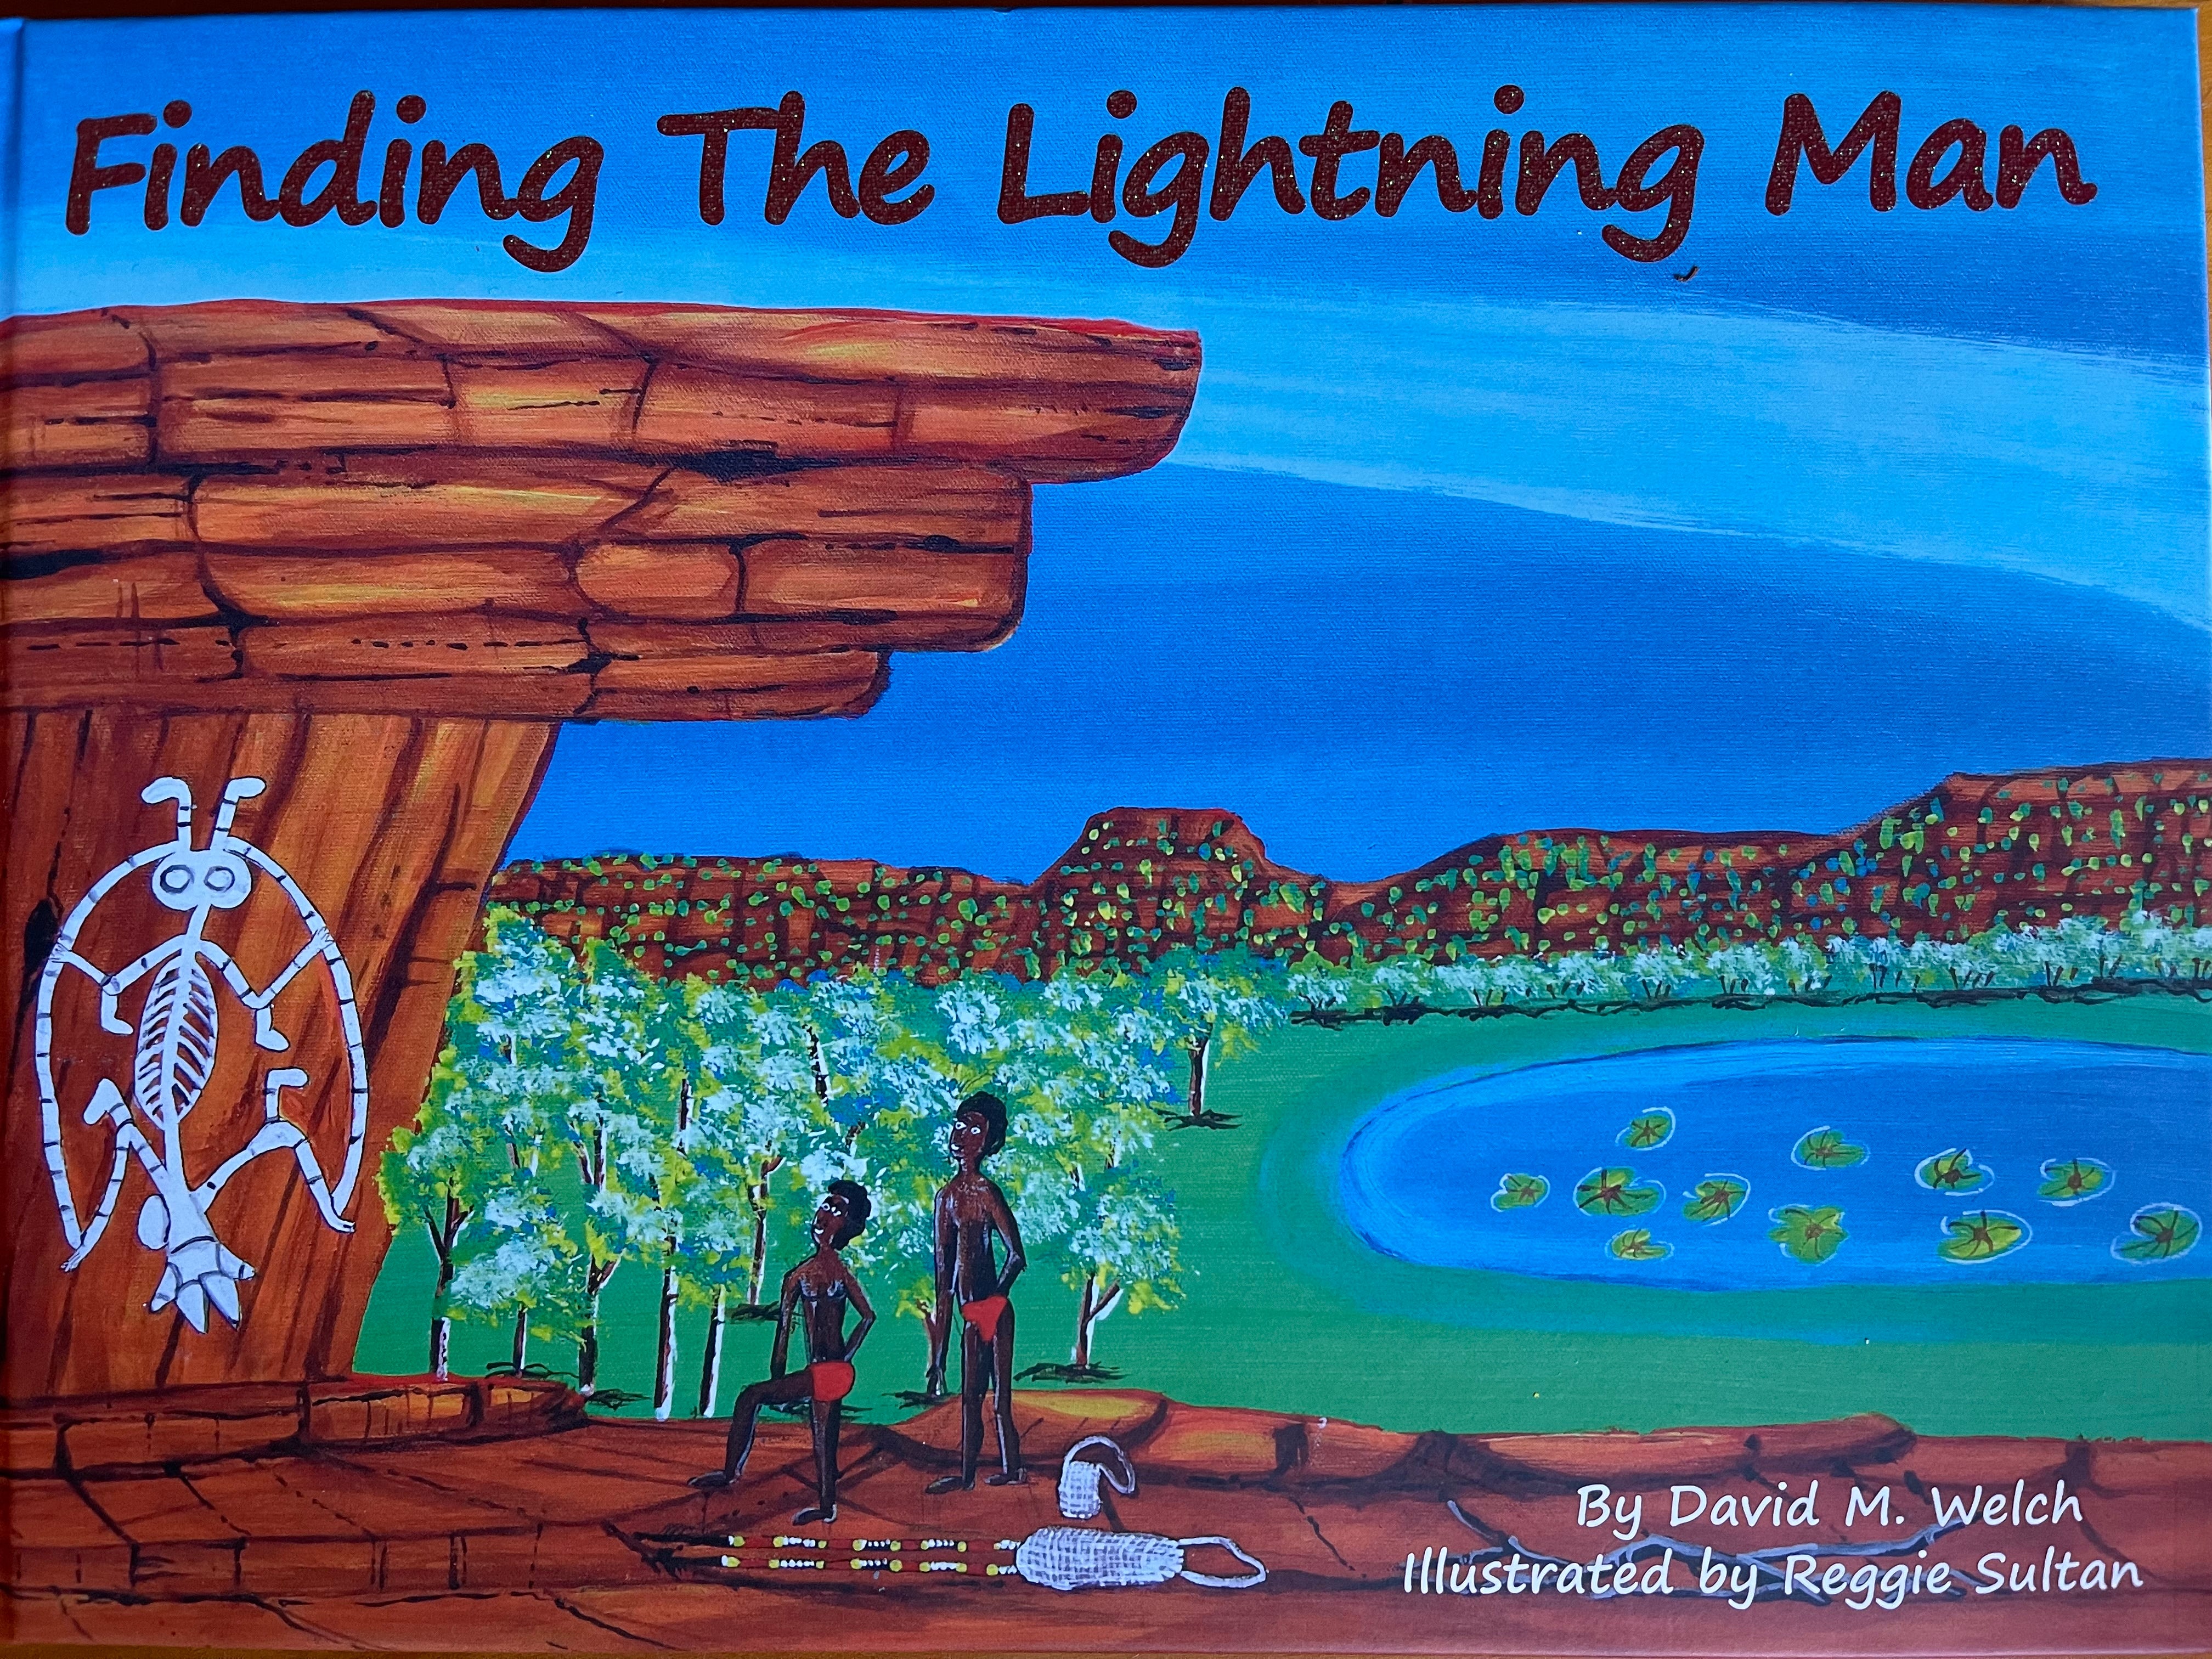 Hardcover Book - Finding the Lightning Man - David Welch - Reggie Sultan